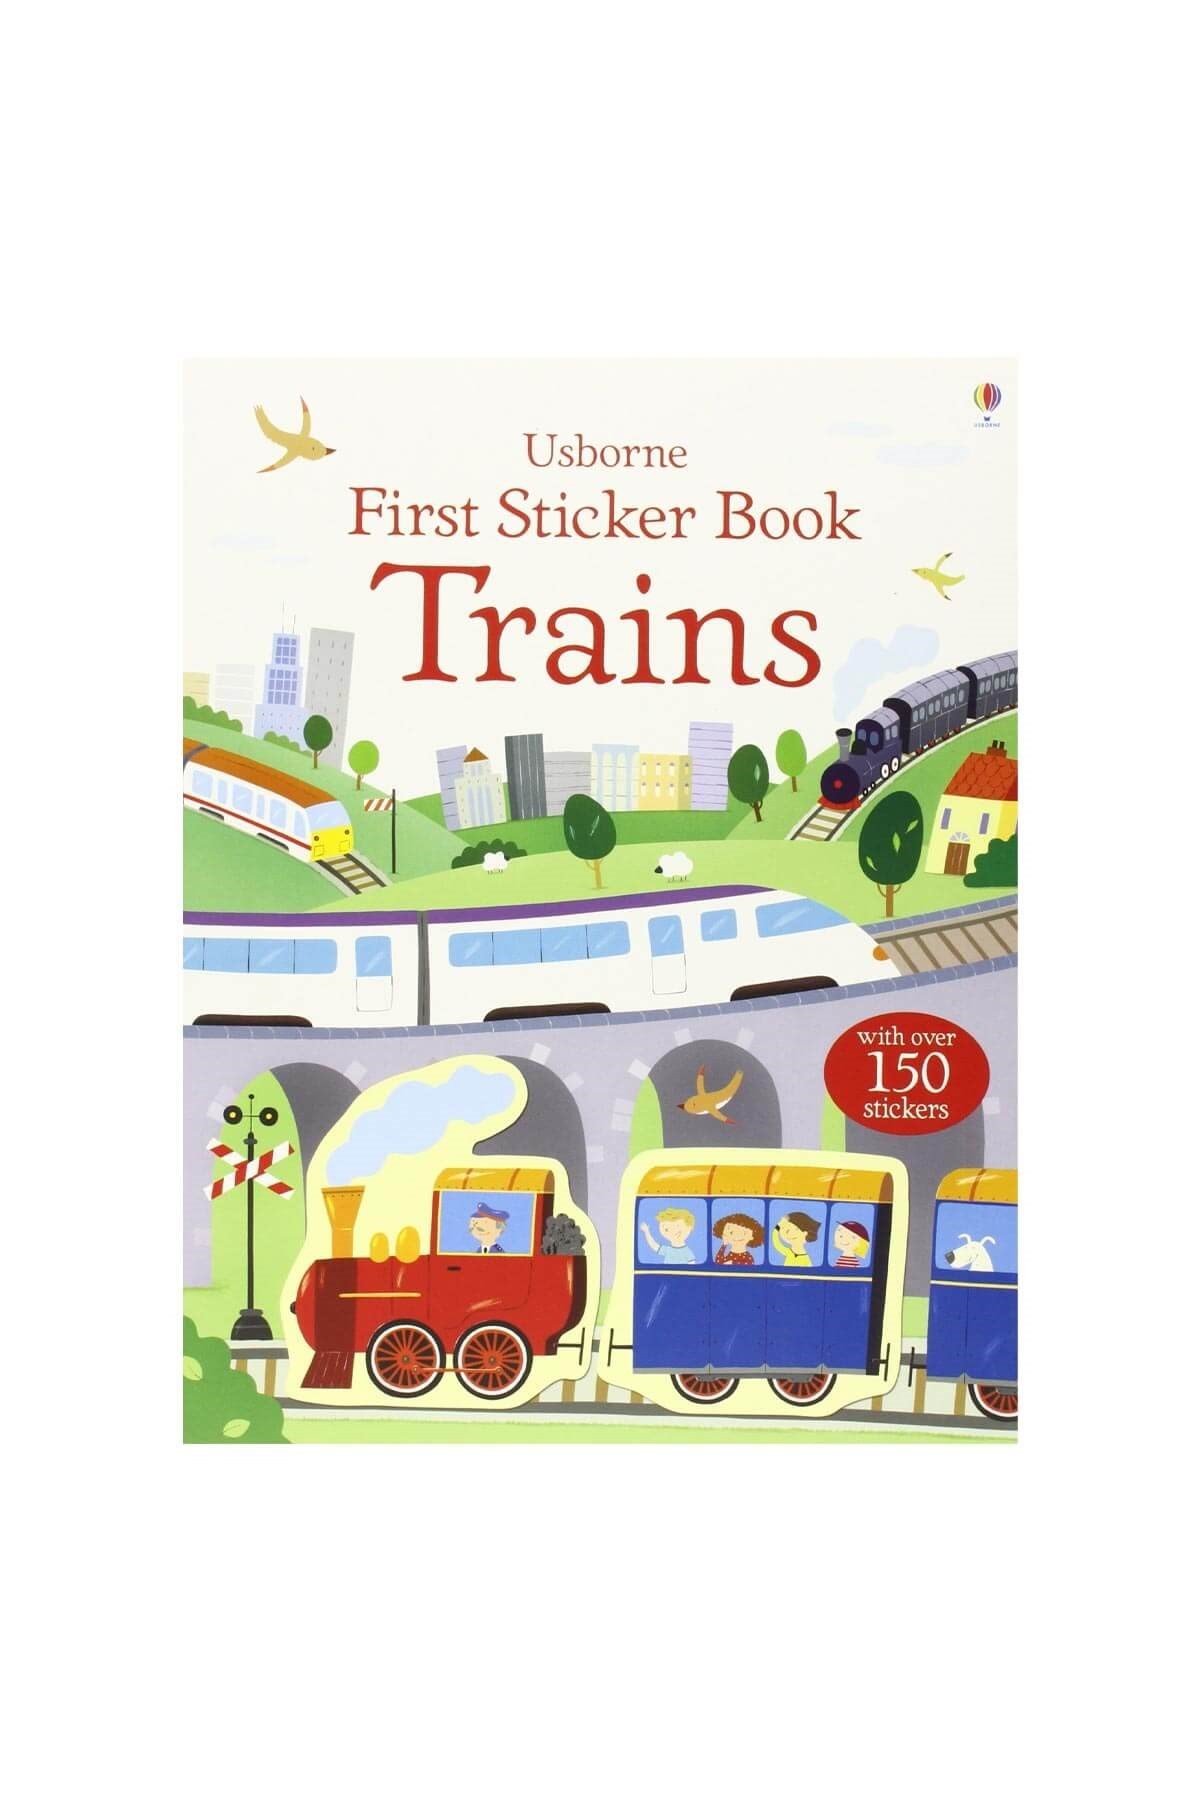 The Usborne First Sticker Book Trains